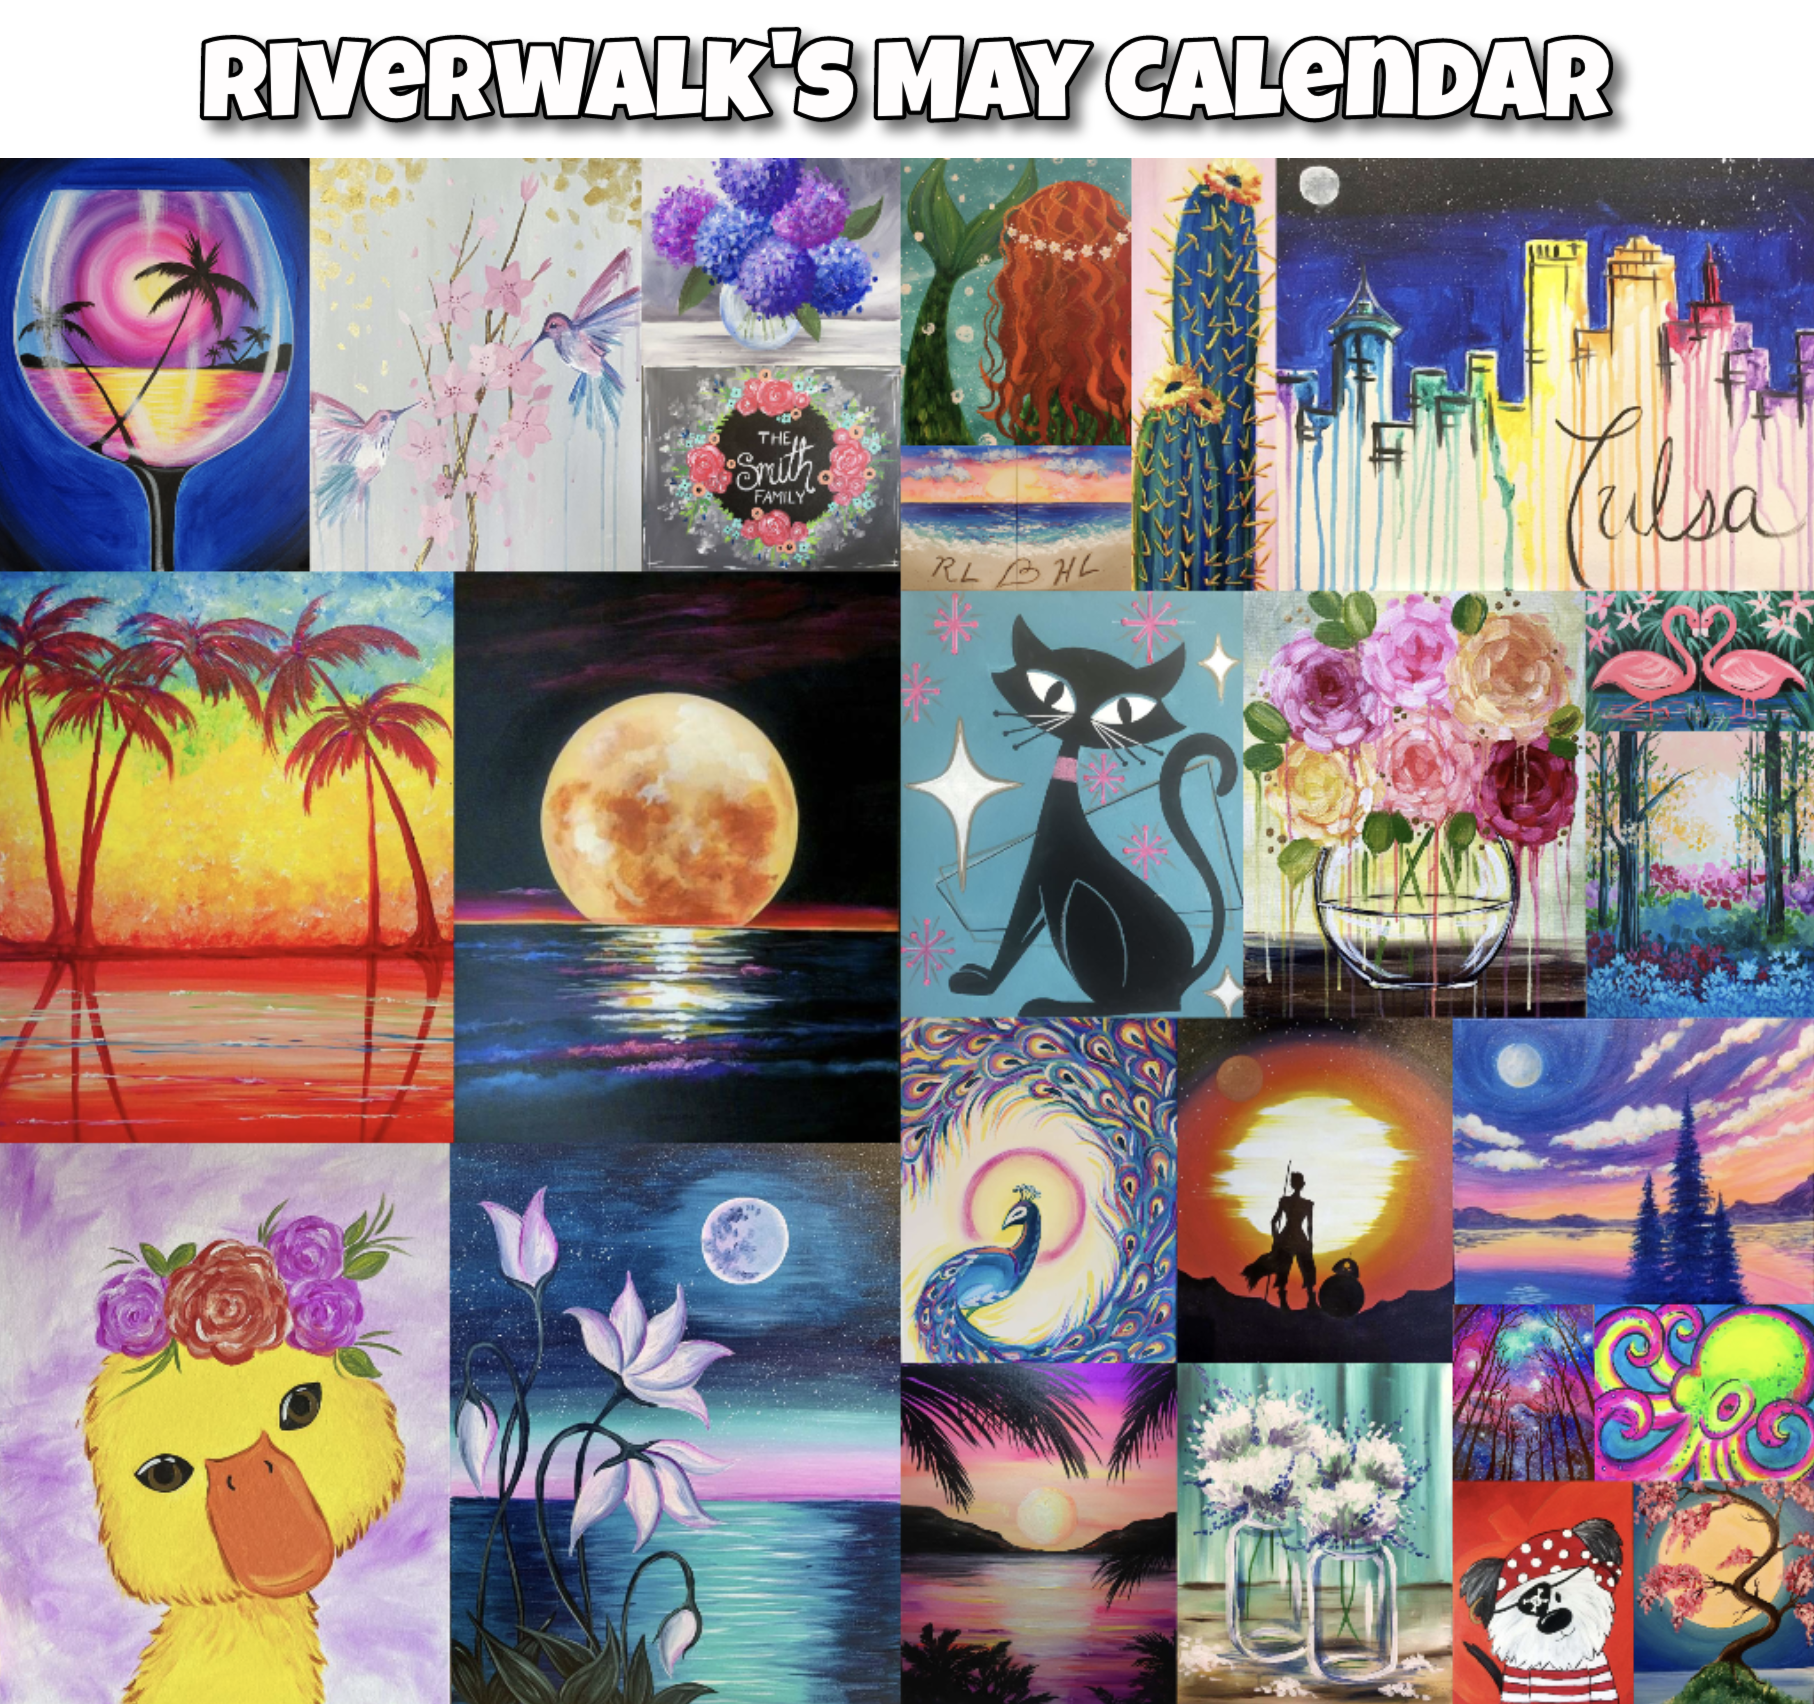 Paint at Riverwalk in May!